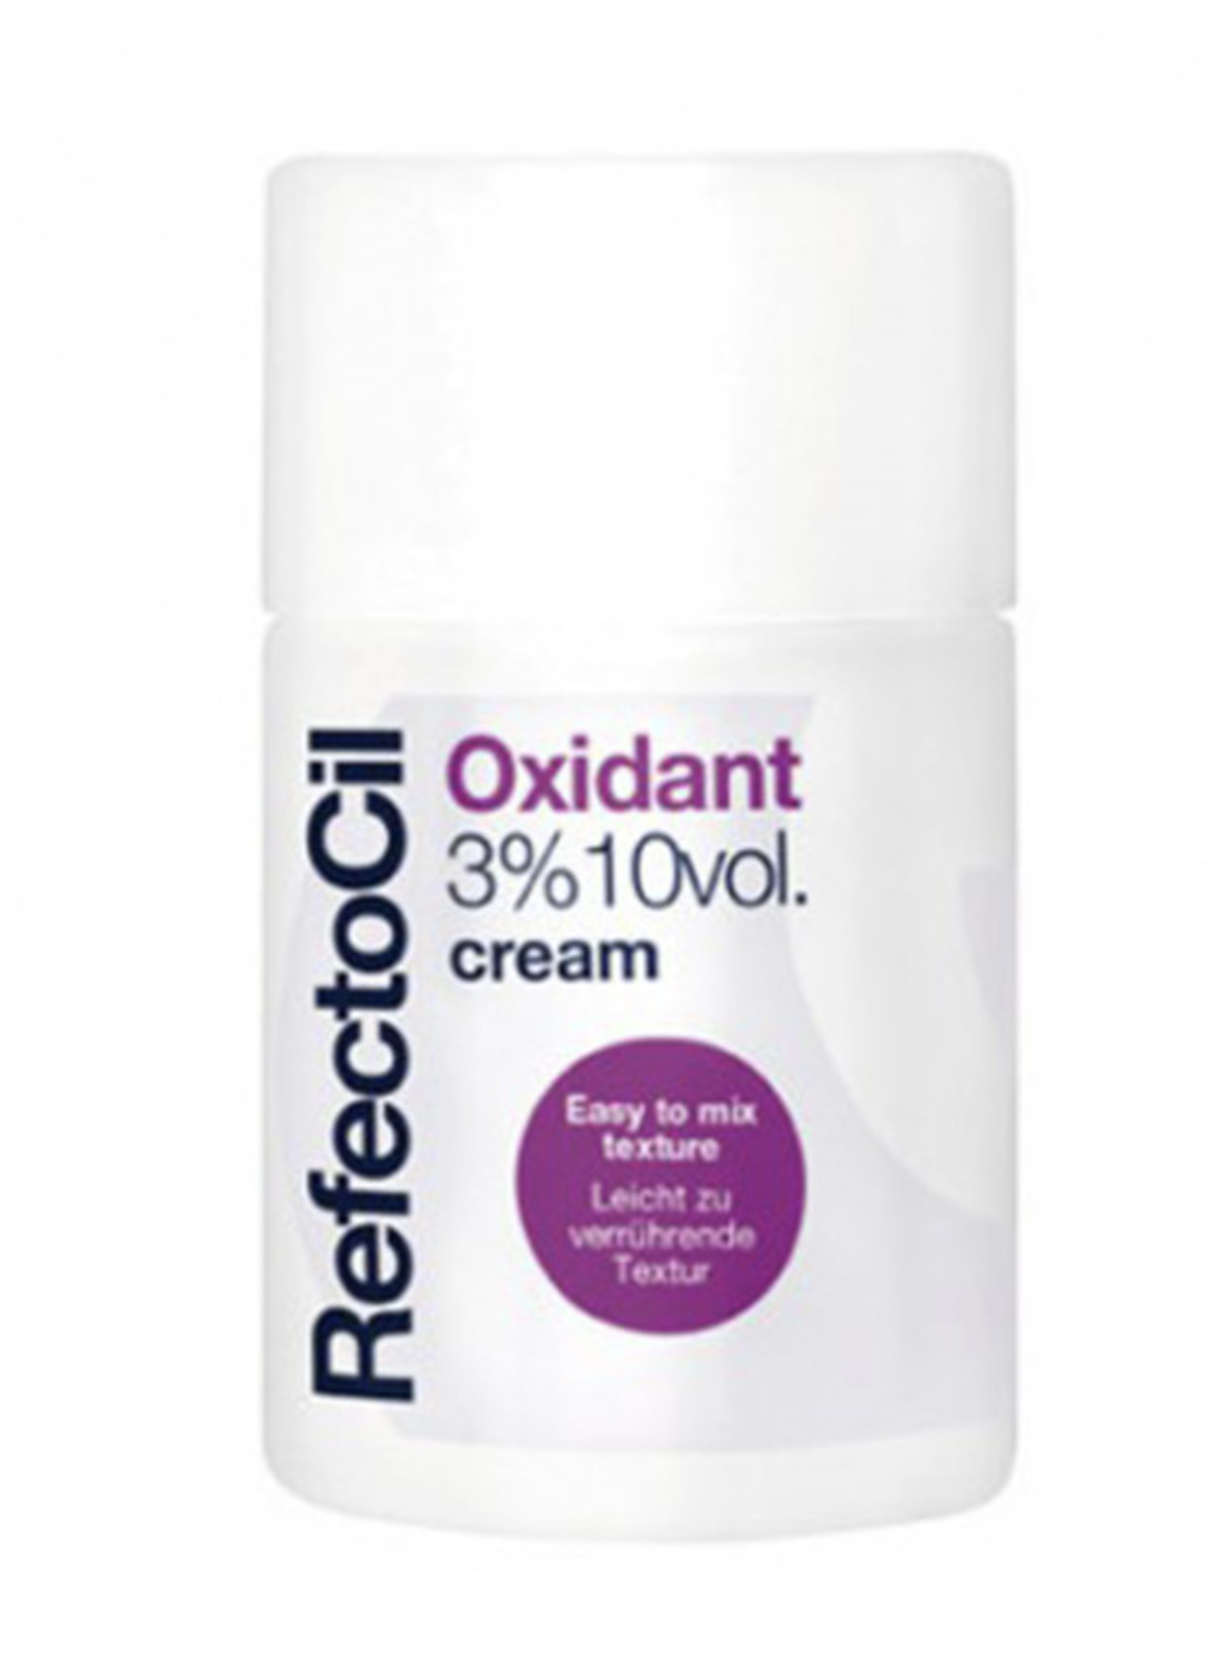 RefectoCil oxidant crème 3%